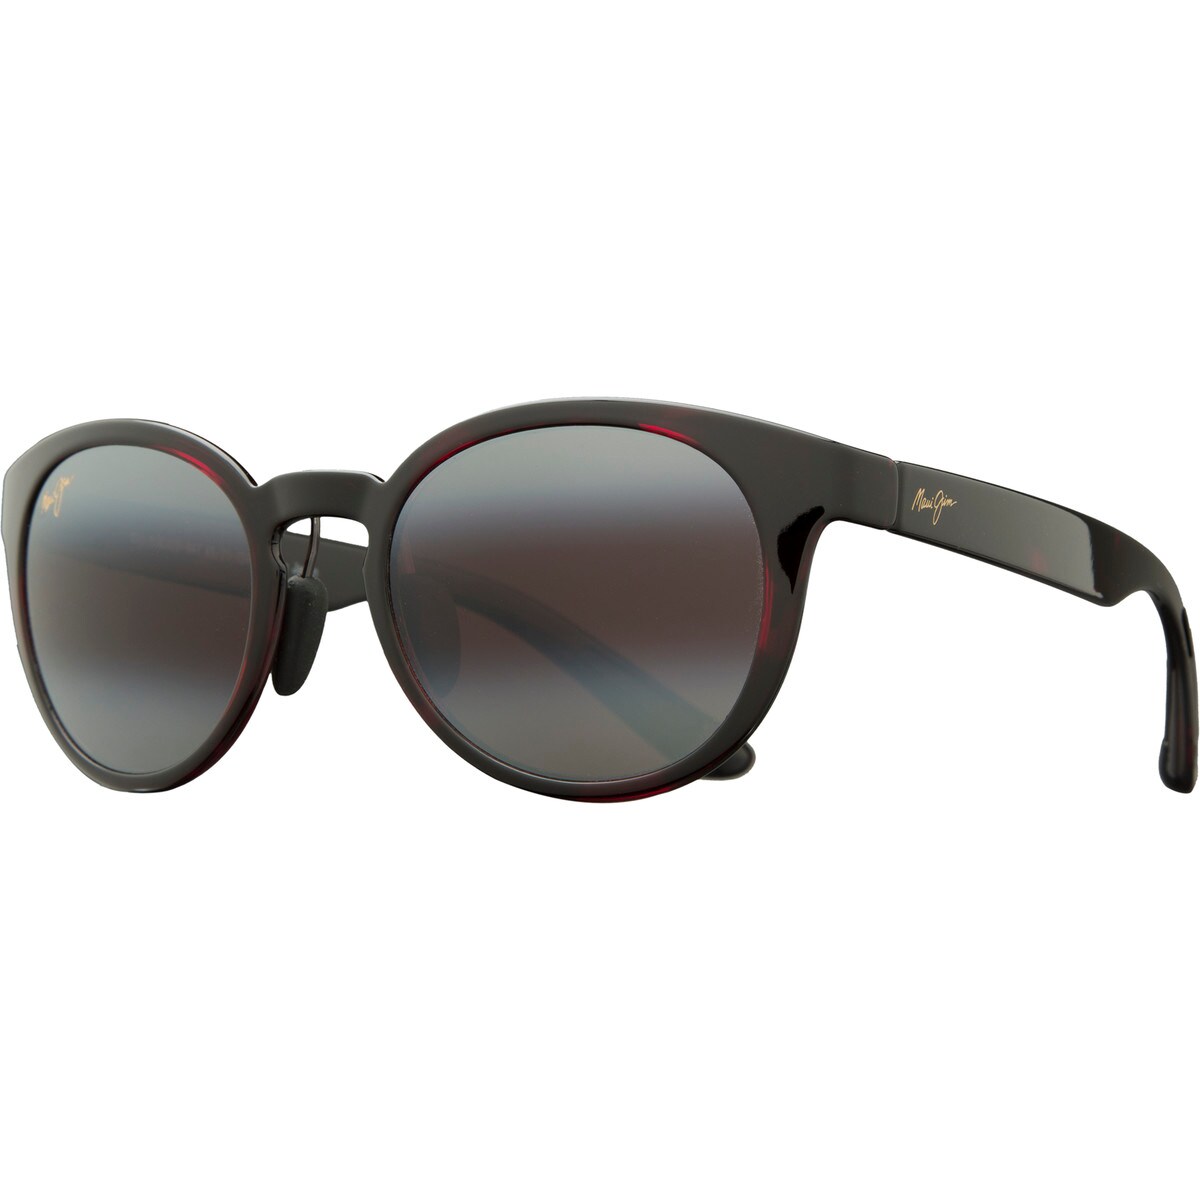 Maui Jim Keanae Sunglasses - Polarized Red/Black Tortoise/